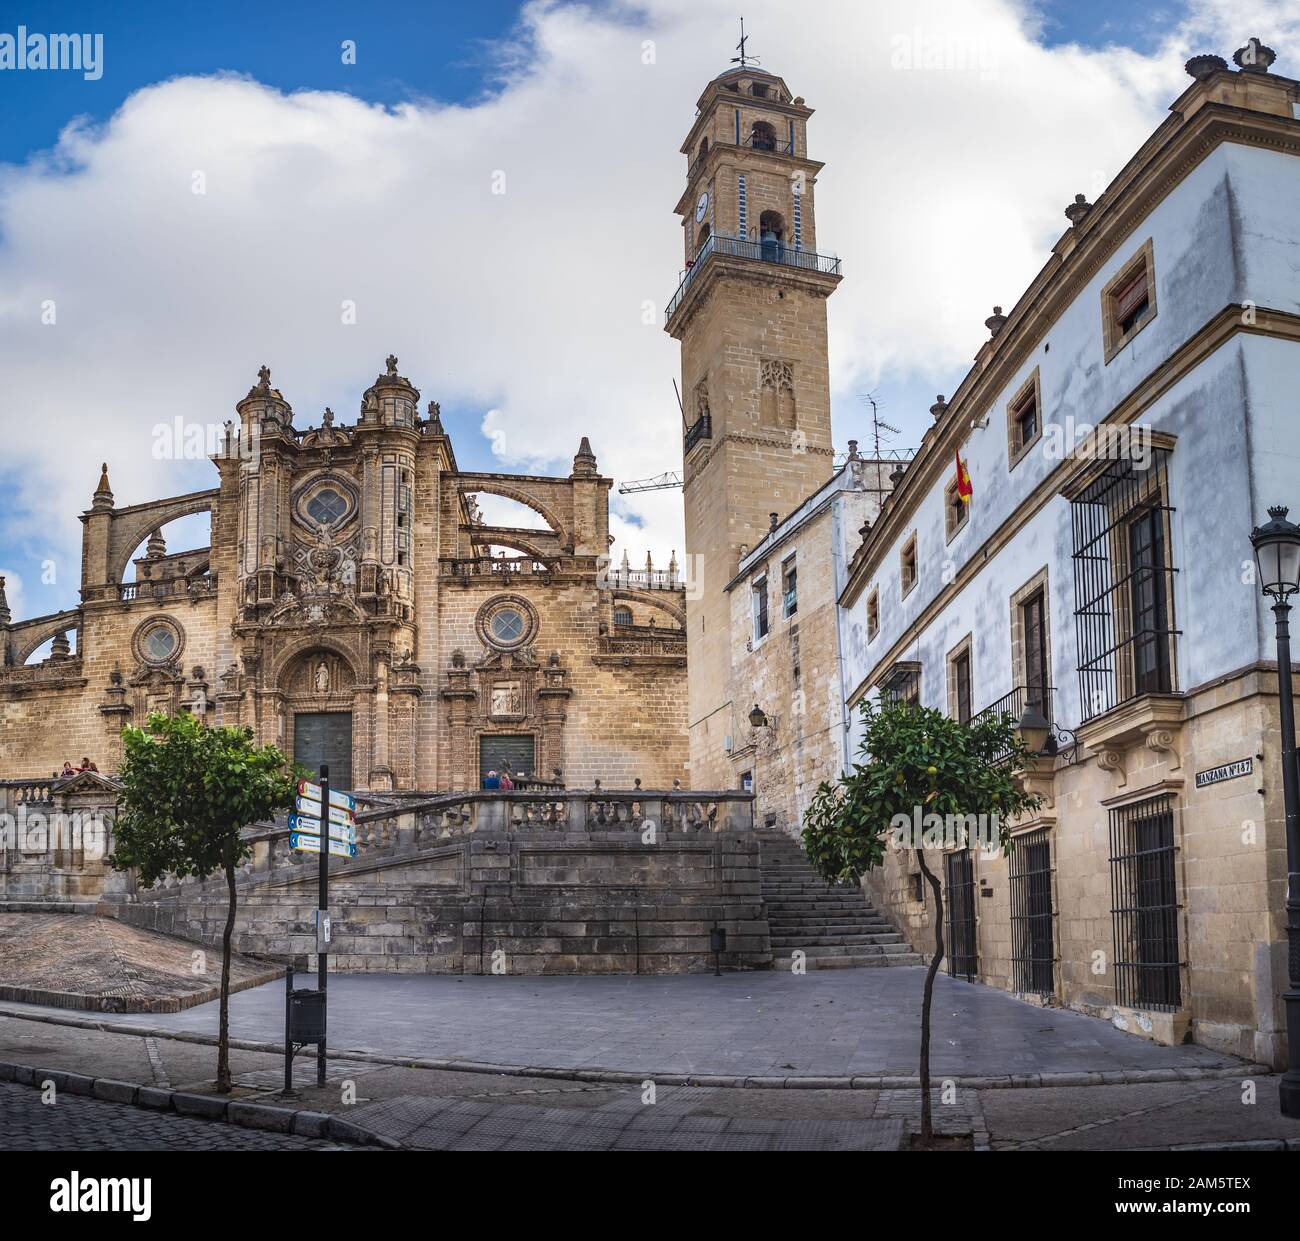 JEREZ DE LA FRONTERA, ESPAGNE - circa 2019, novembre : La Cathédrale de Jerez de la Frontera en Andalousie, Espagne Banque D'Images